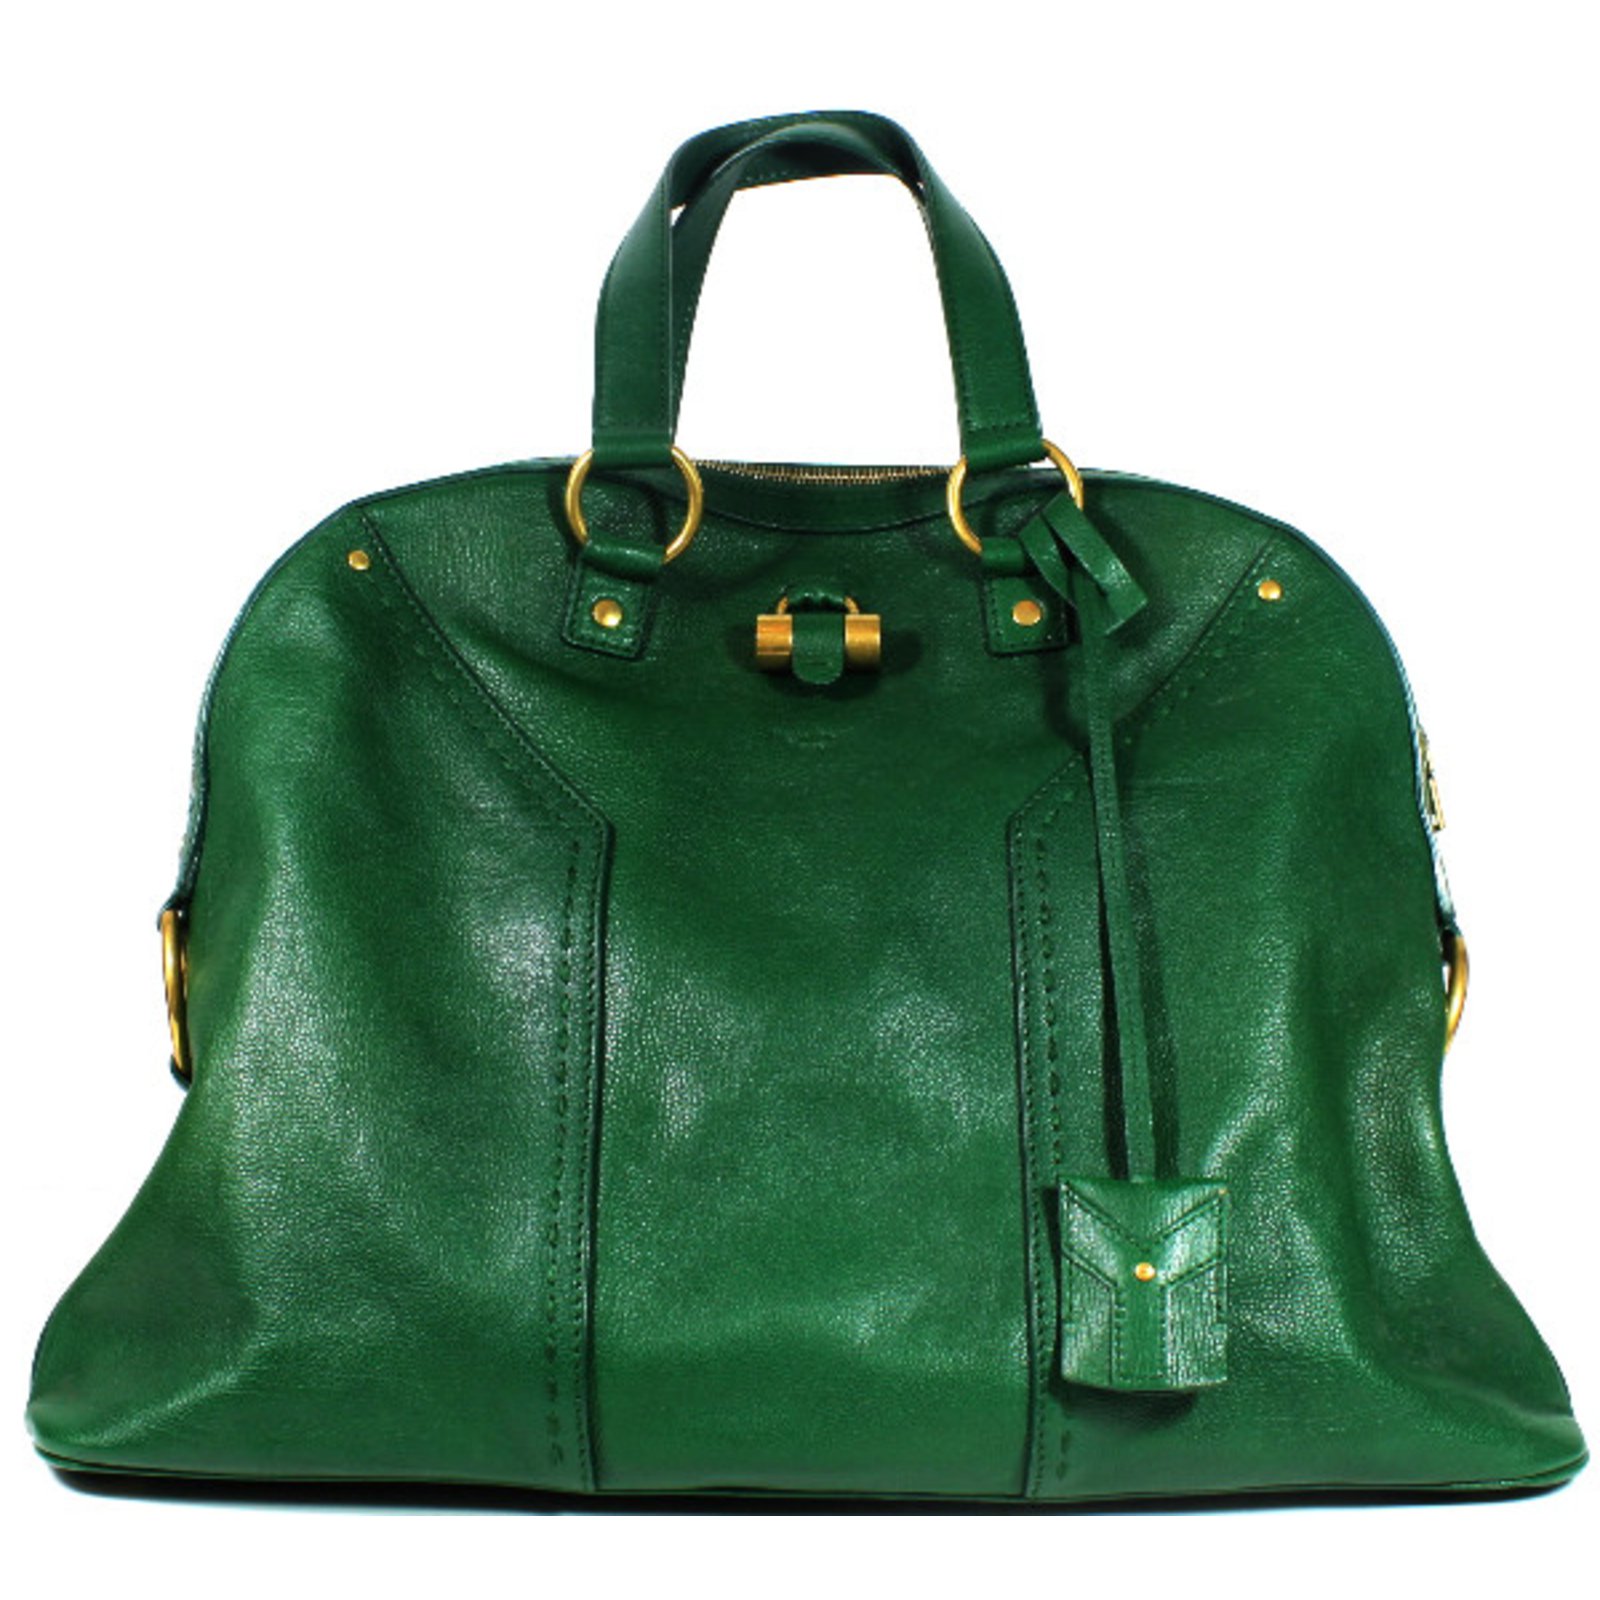 Ysl Green Handbags Online | IQS Executive